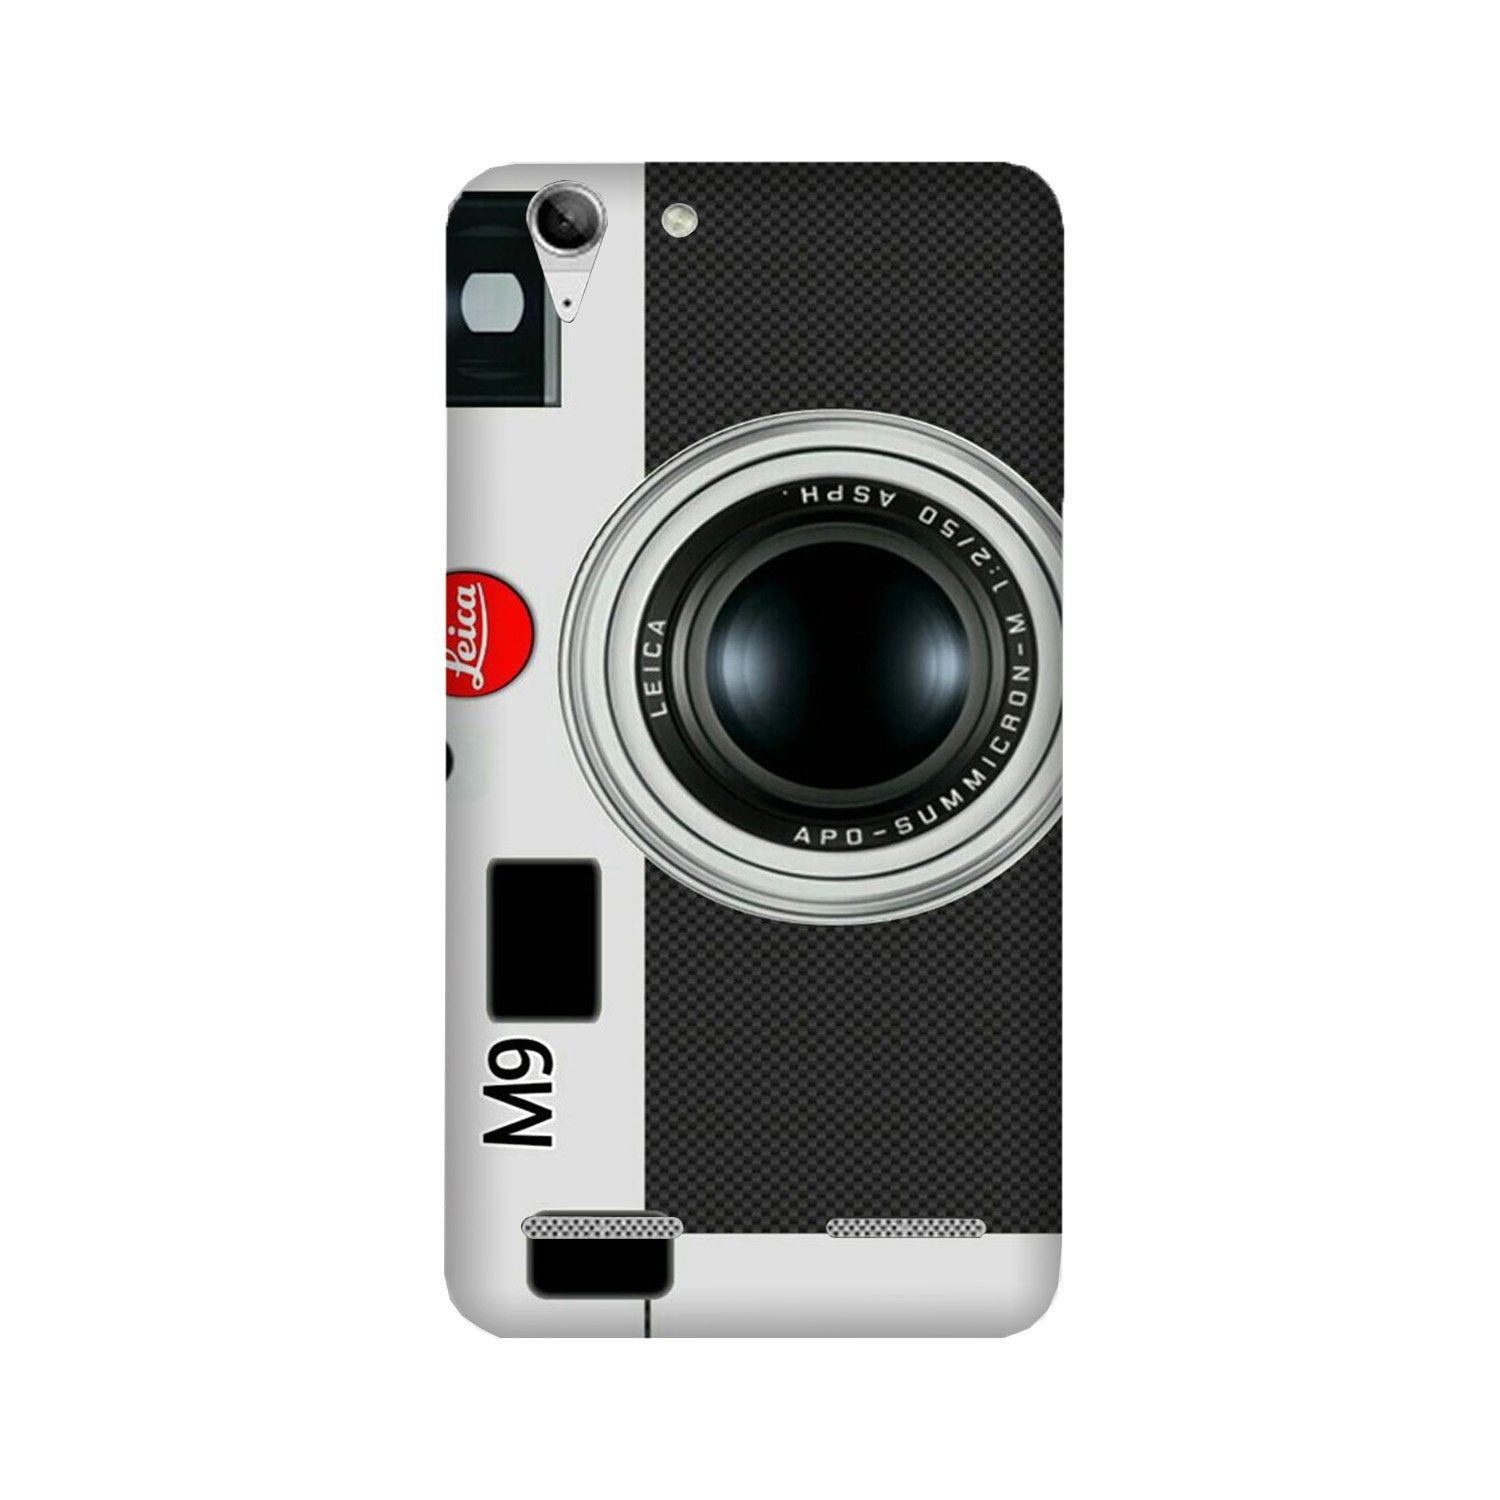 Camera Case for Lenovo K5 / K5 Plus (Design No. 257)